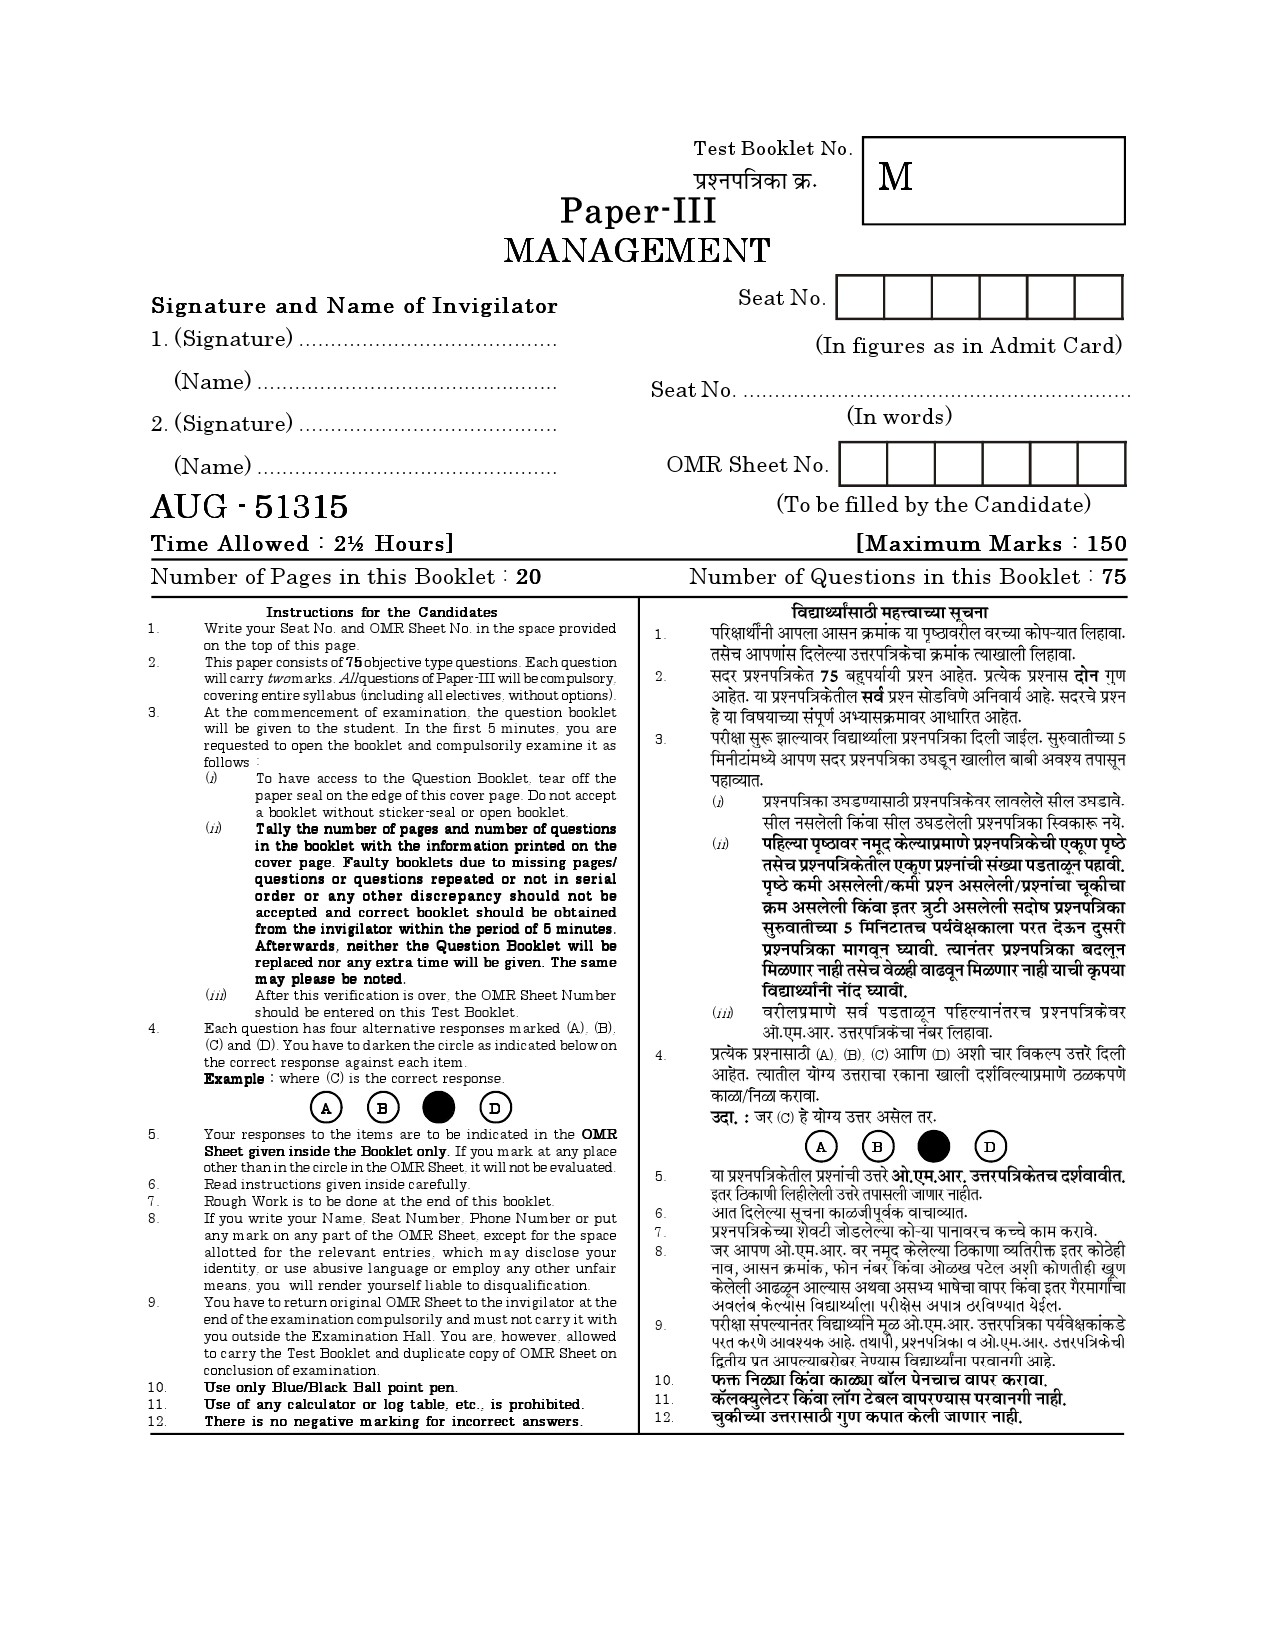 Maharashtra SET Management Question Paper III August 2015 1